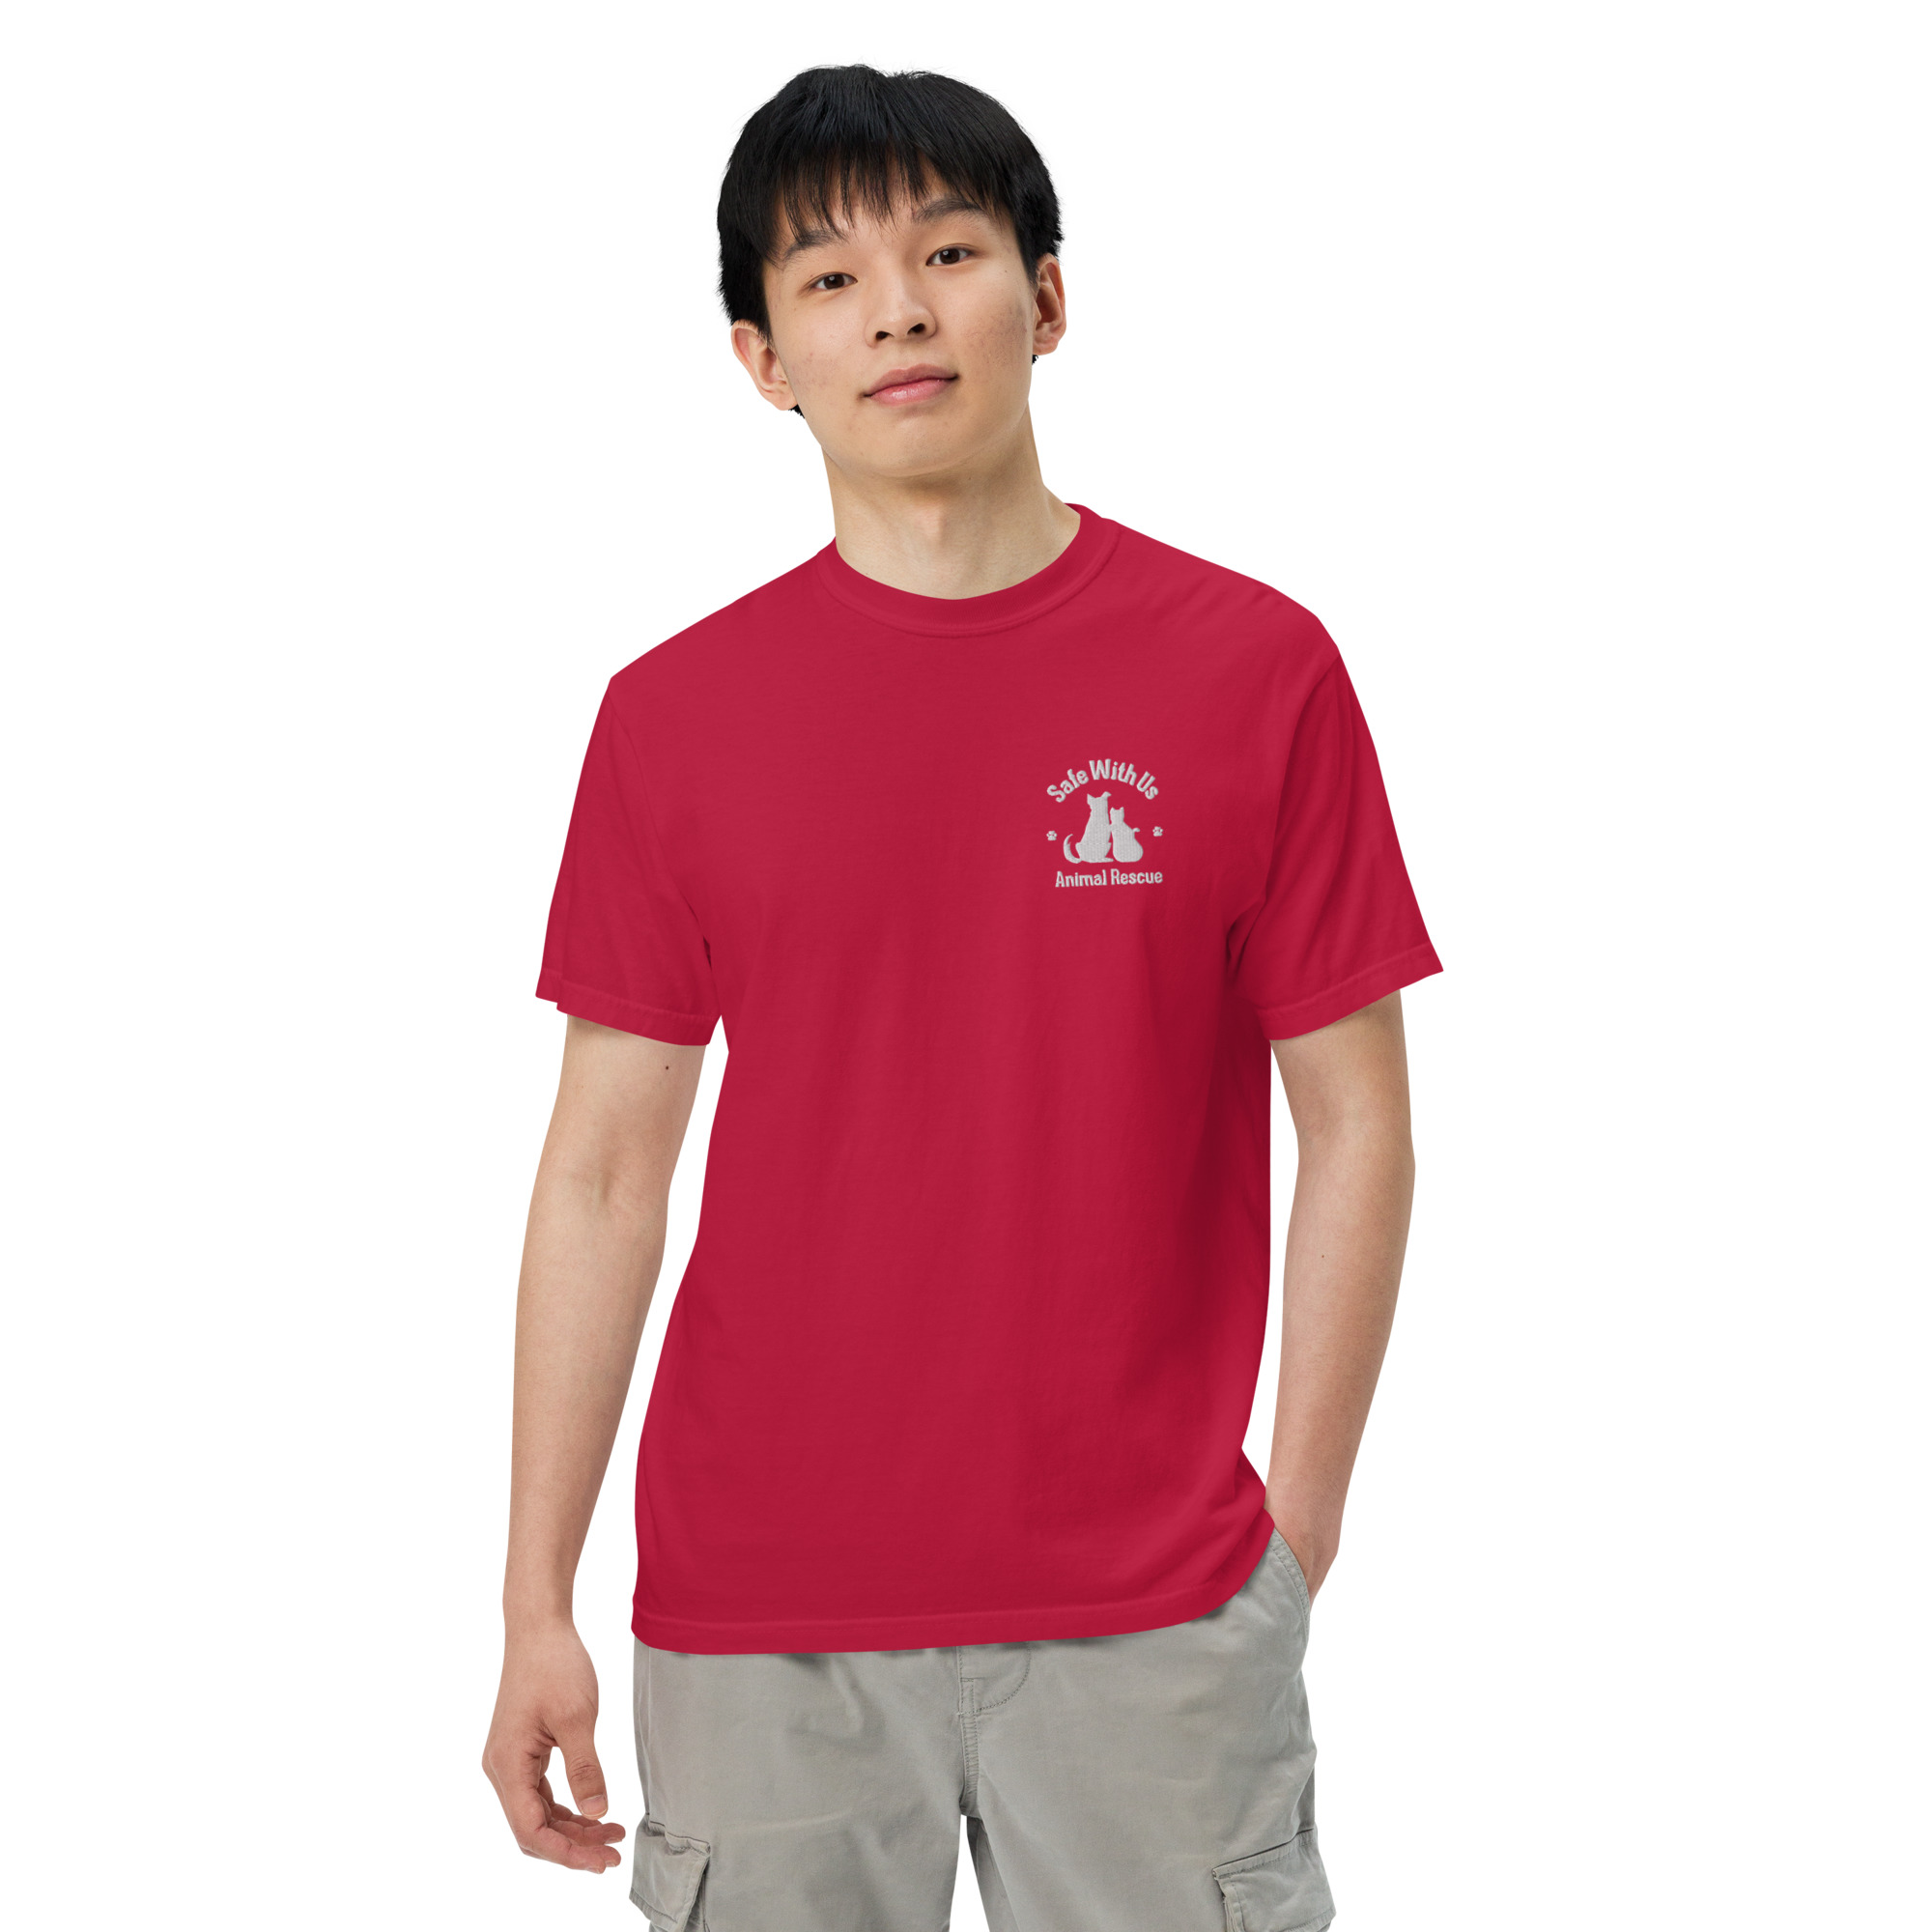 mens-garment-dyed-heavyweight-t-shirt-red-front-2-6415fedc24c44.jpg